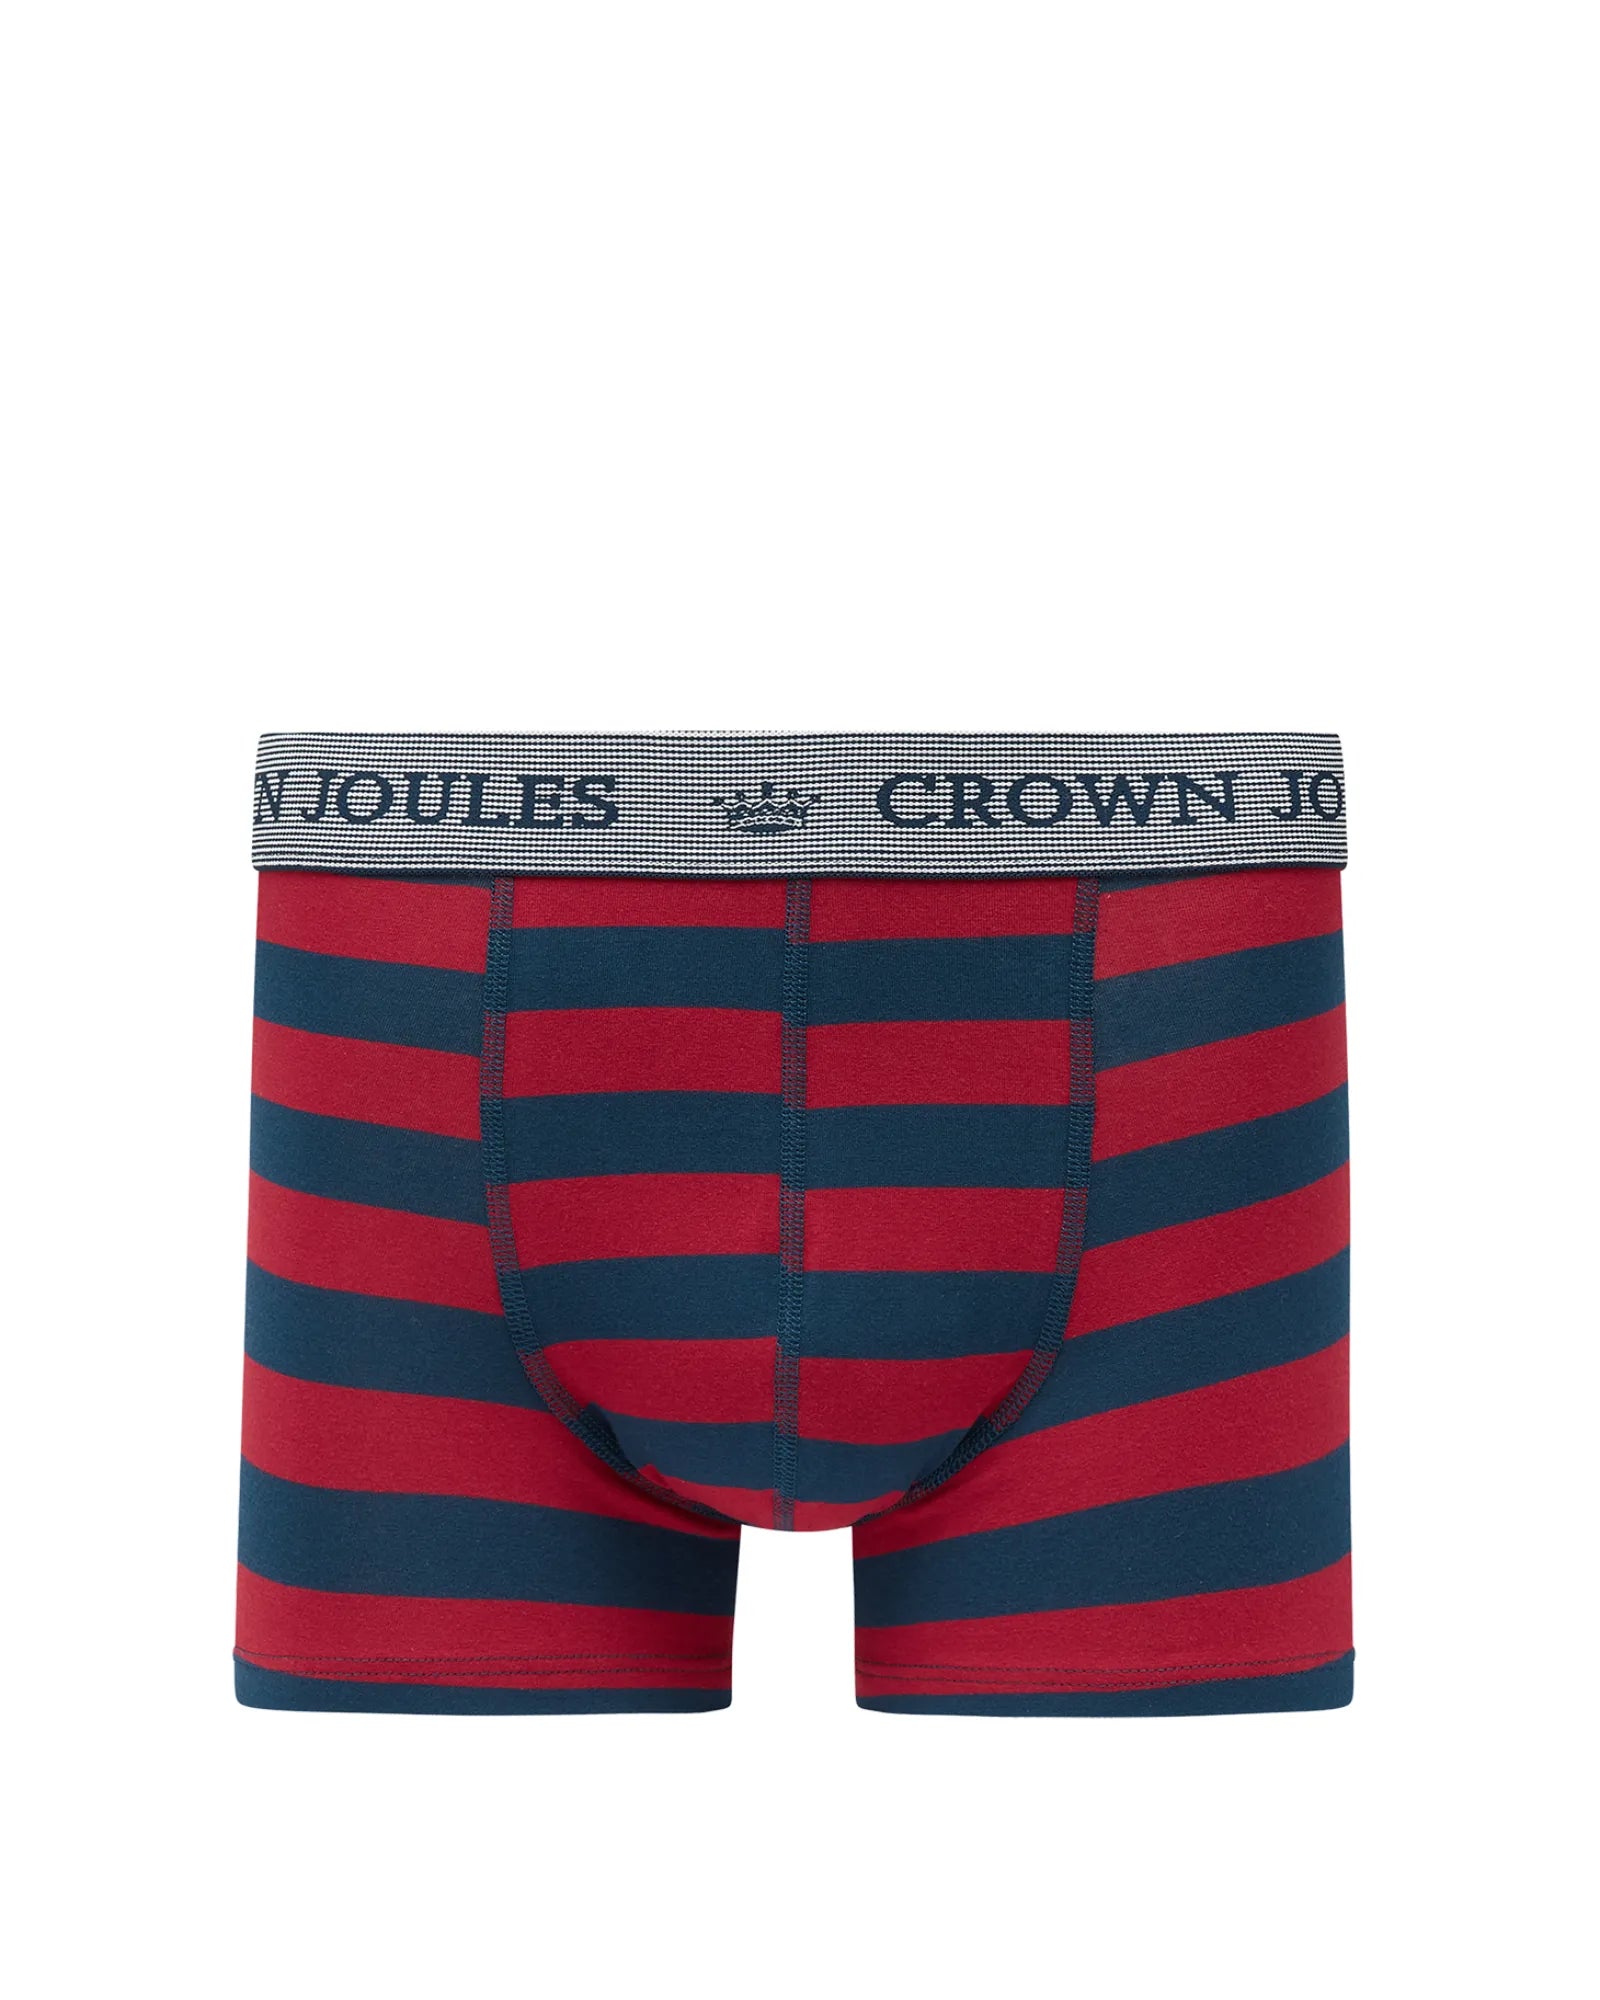 Crown Joules Boxer Shorts - Crest Navy